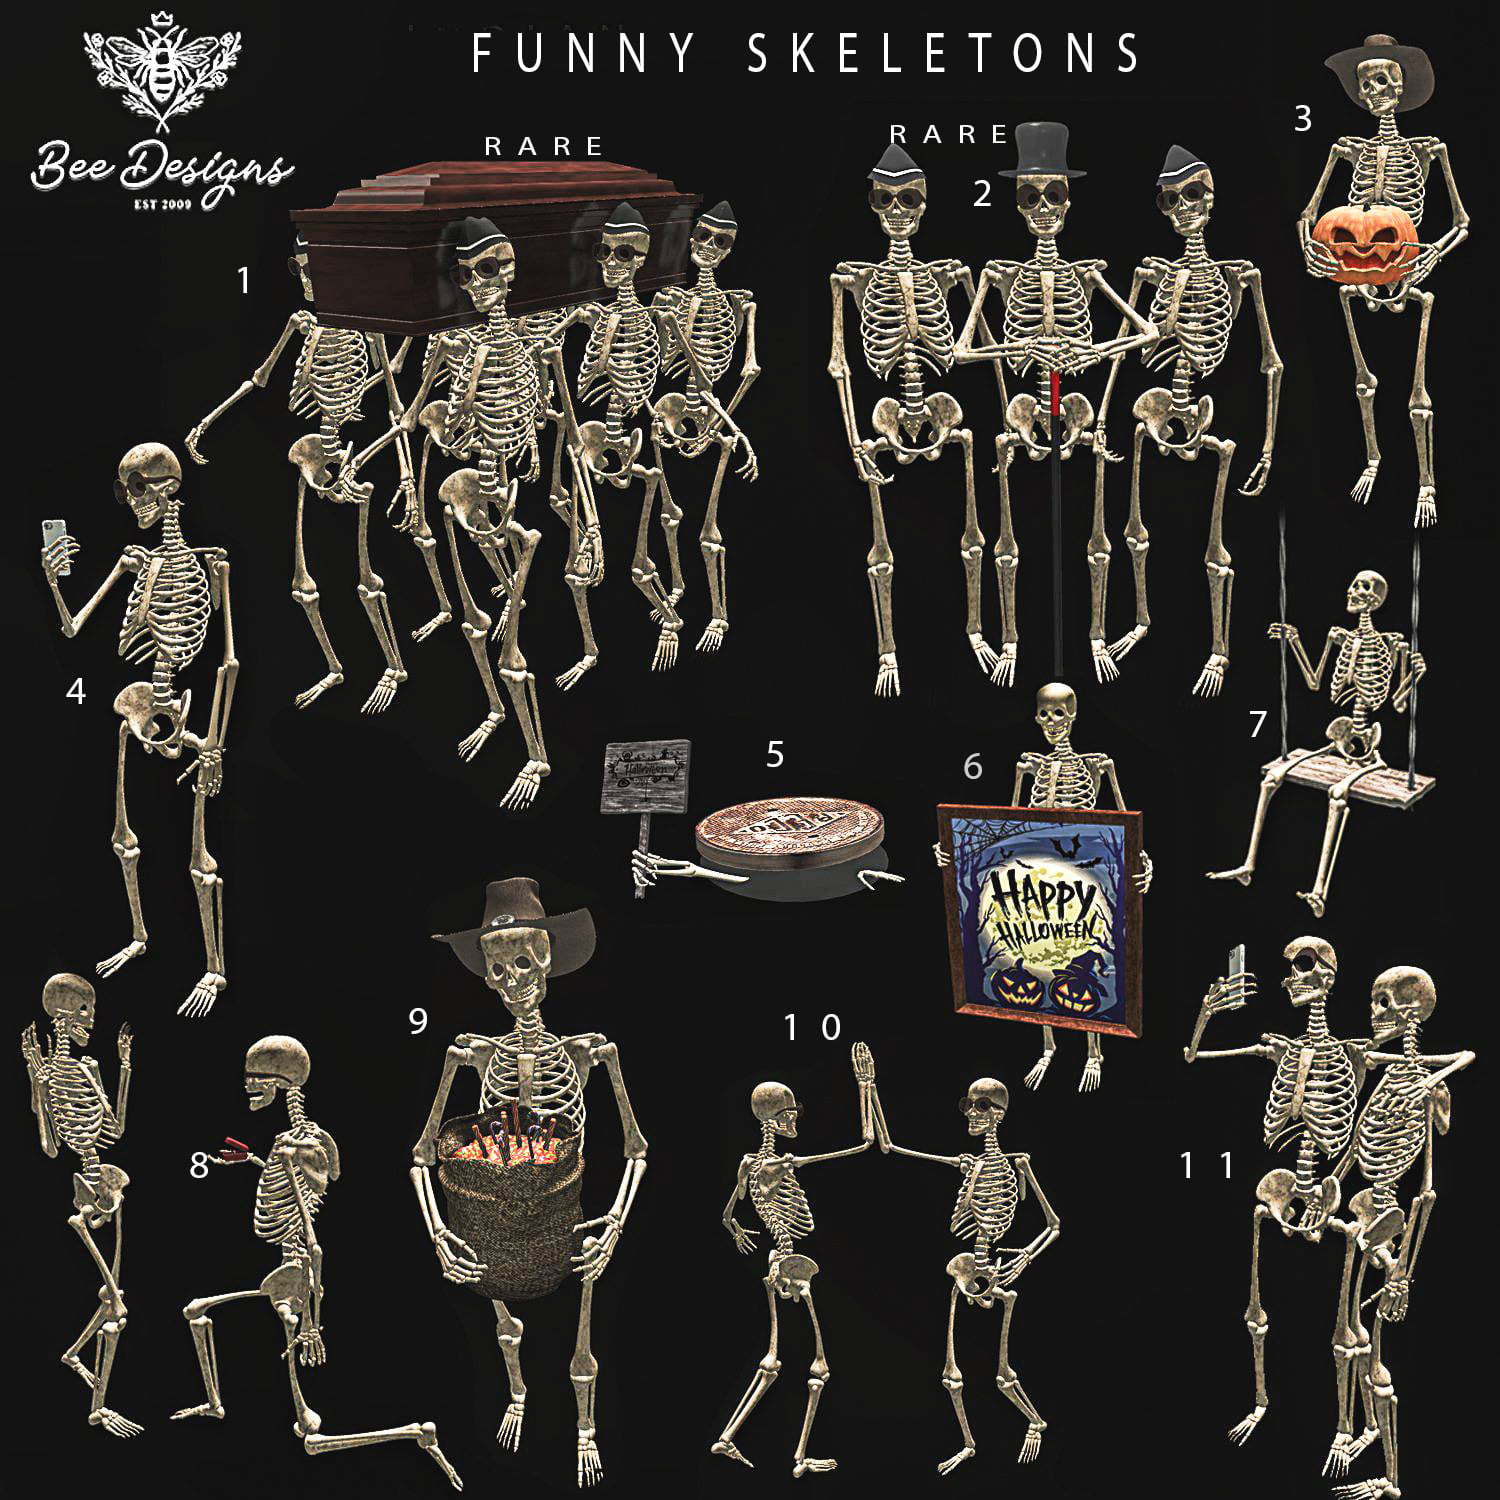 Bee Designs – Funny Skeletons